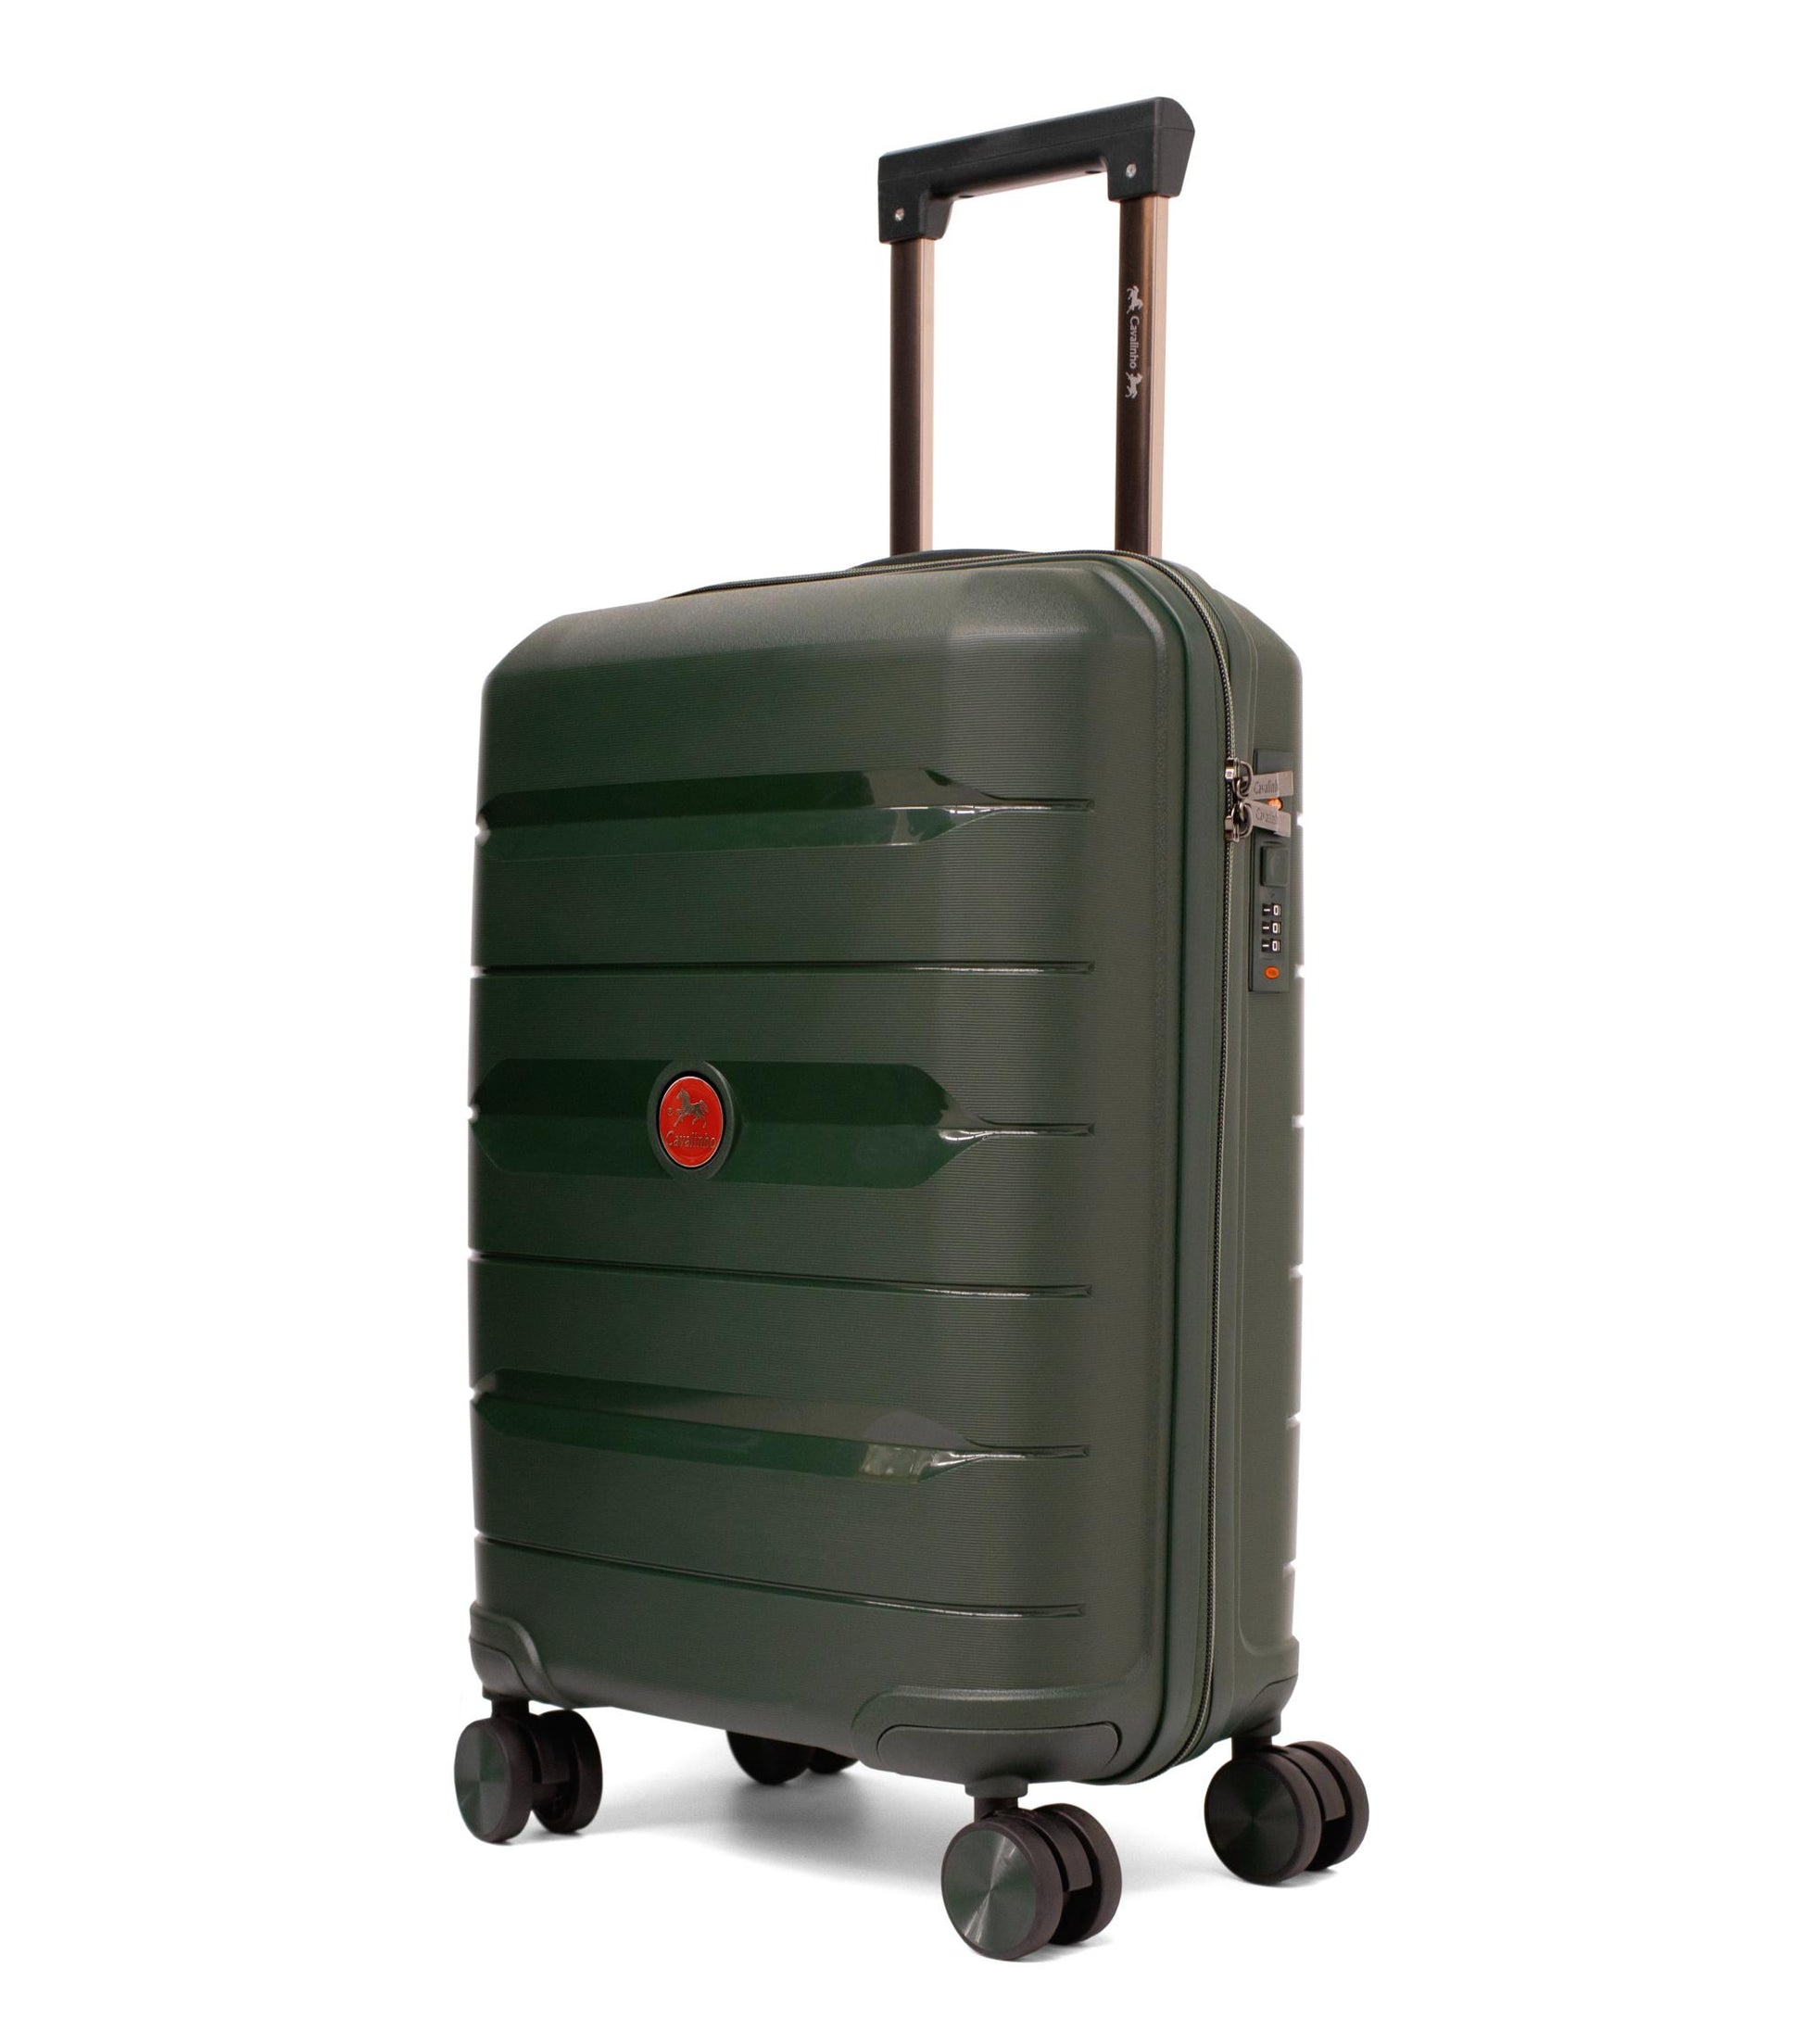 Cavalinho Oasis Carry-on Hardside Luggage (20") - 20 inch DarkOliveGreen - 68040001.09.20_2